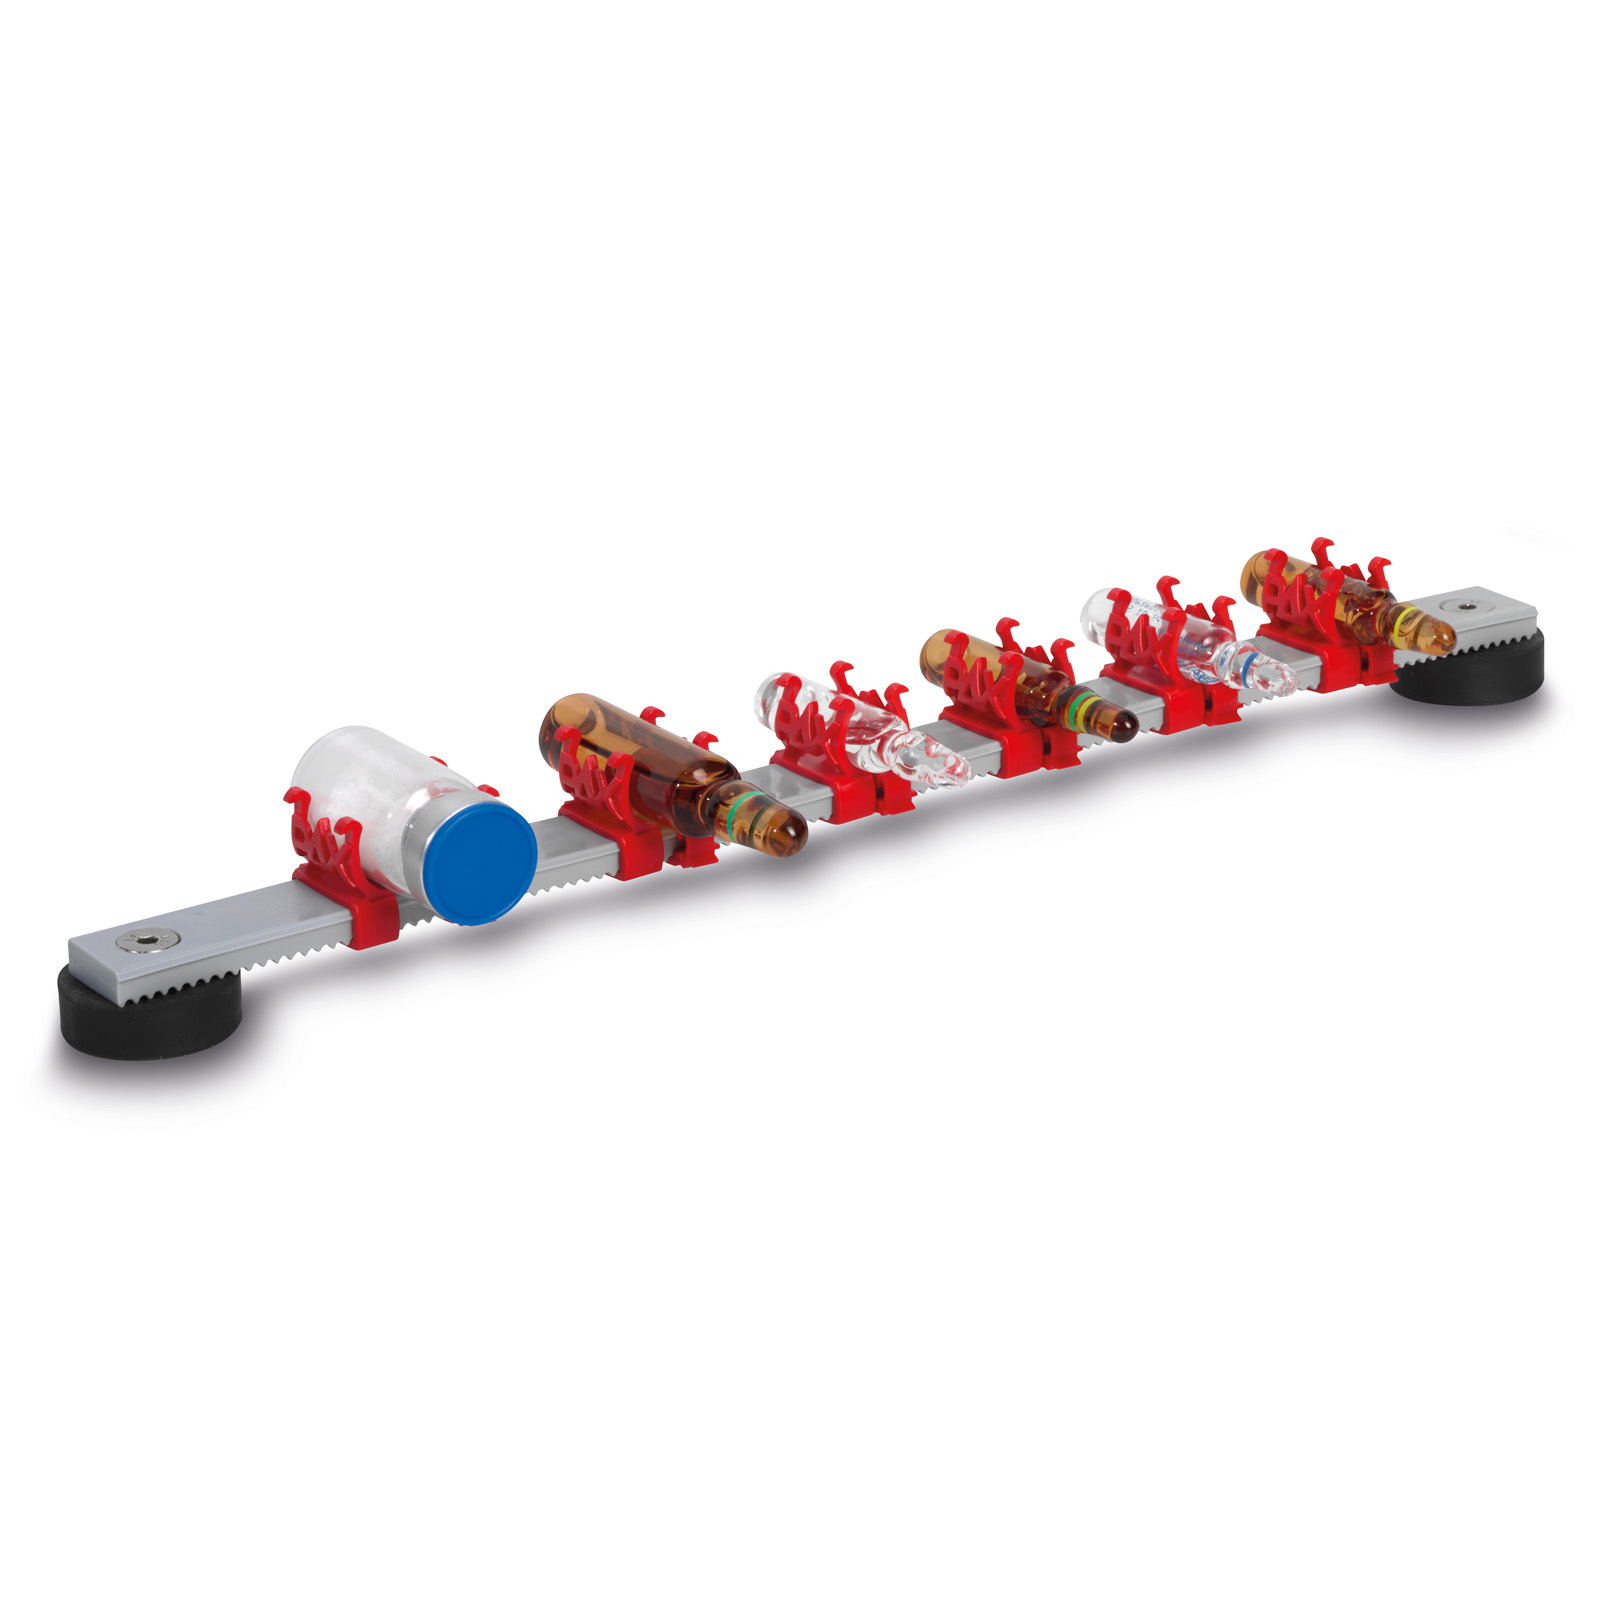 PAX PCI-Magnet Rail